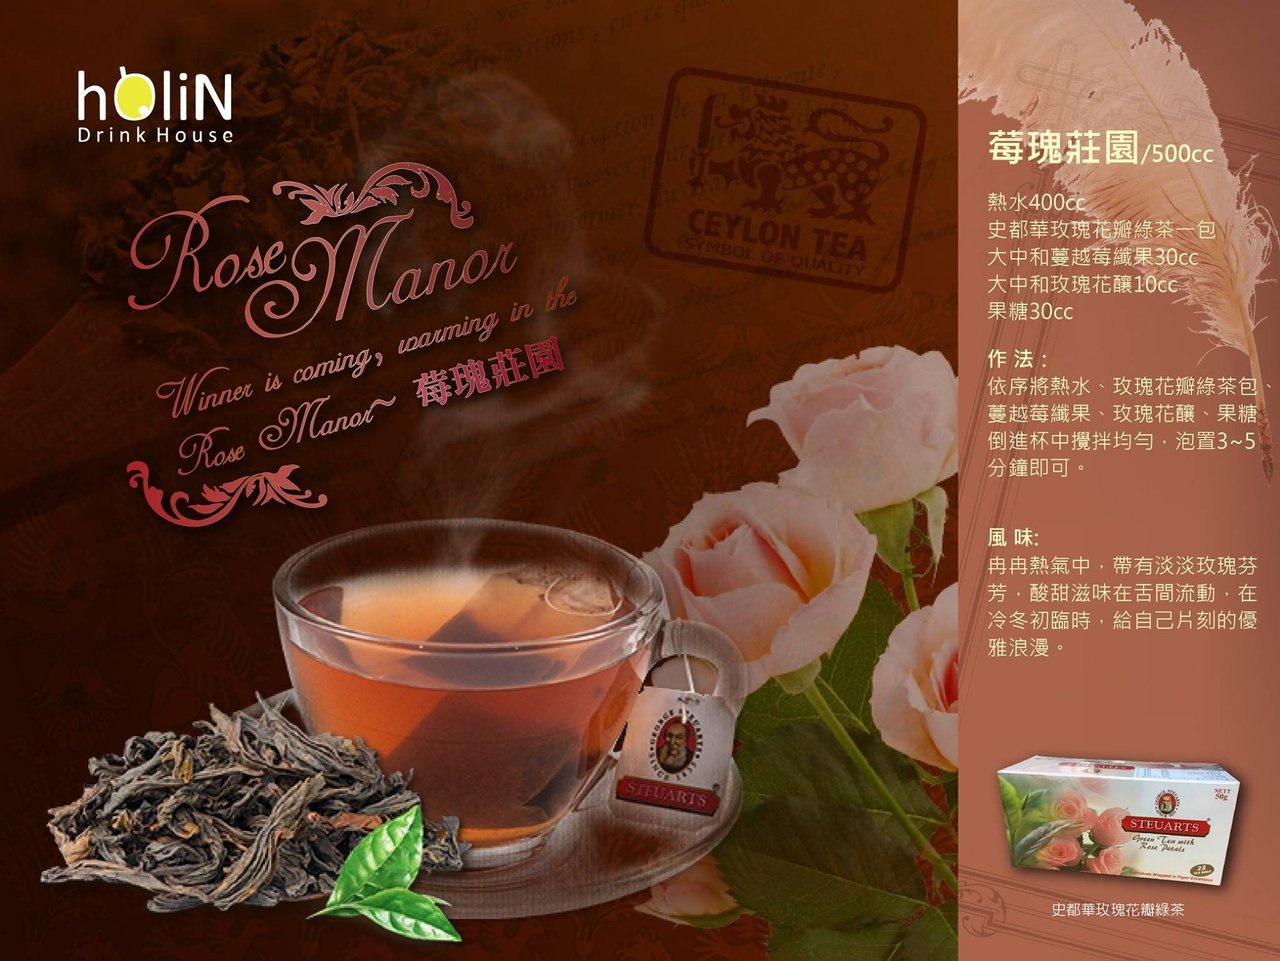 Berry Rose Manor - rose wine,green tea,black tea for milktea,how to make milktea,bubbletea,boba,tapiocapearls